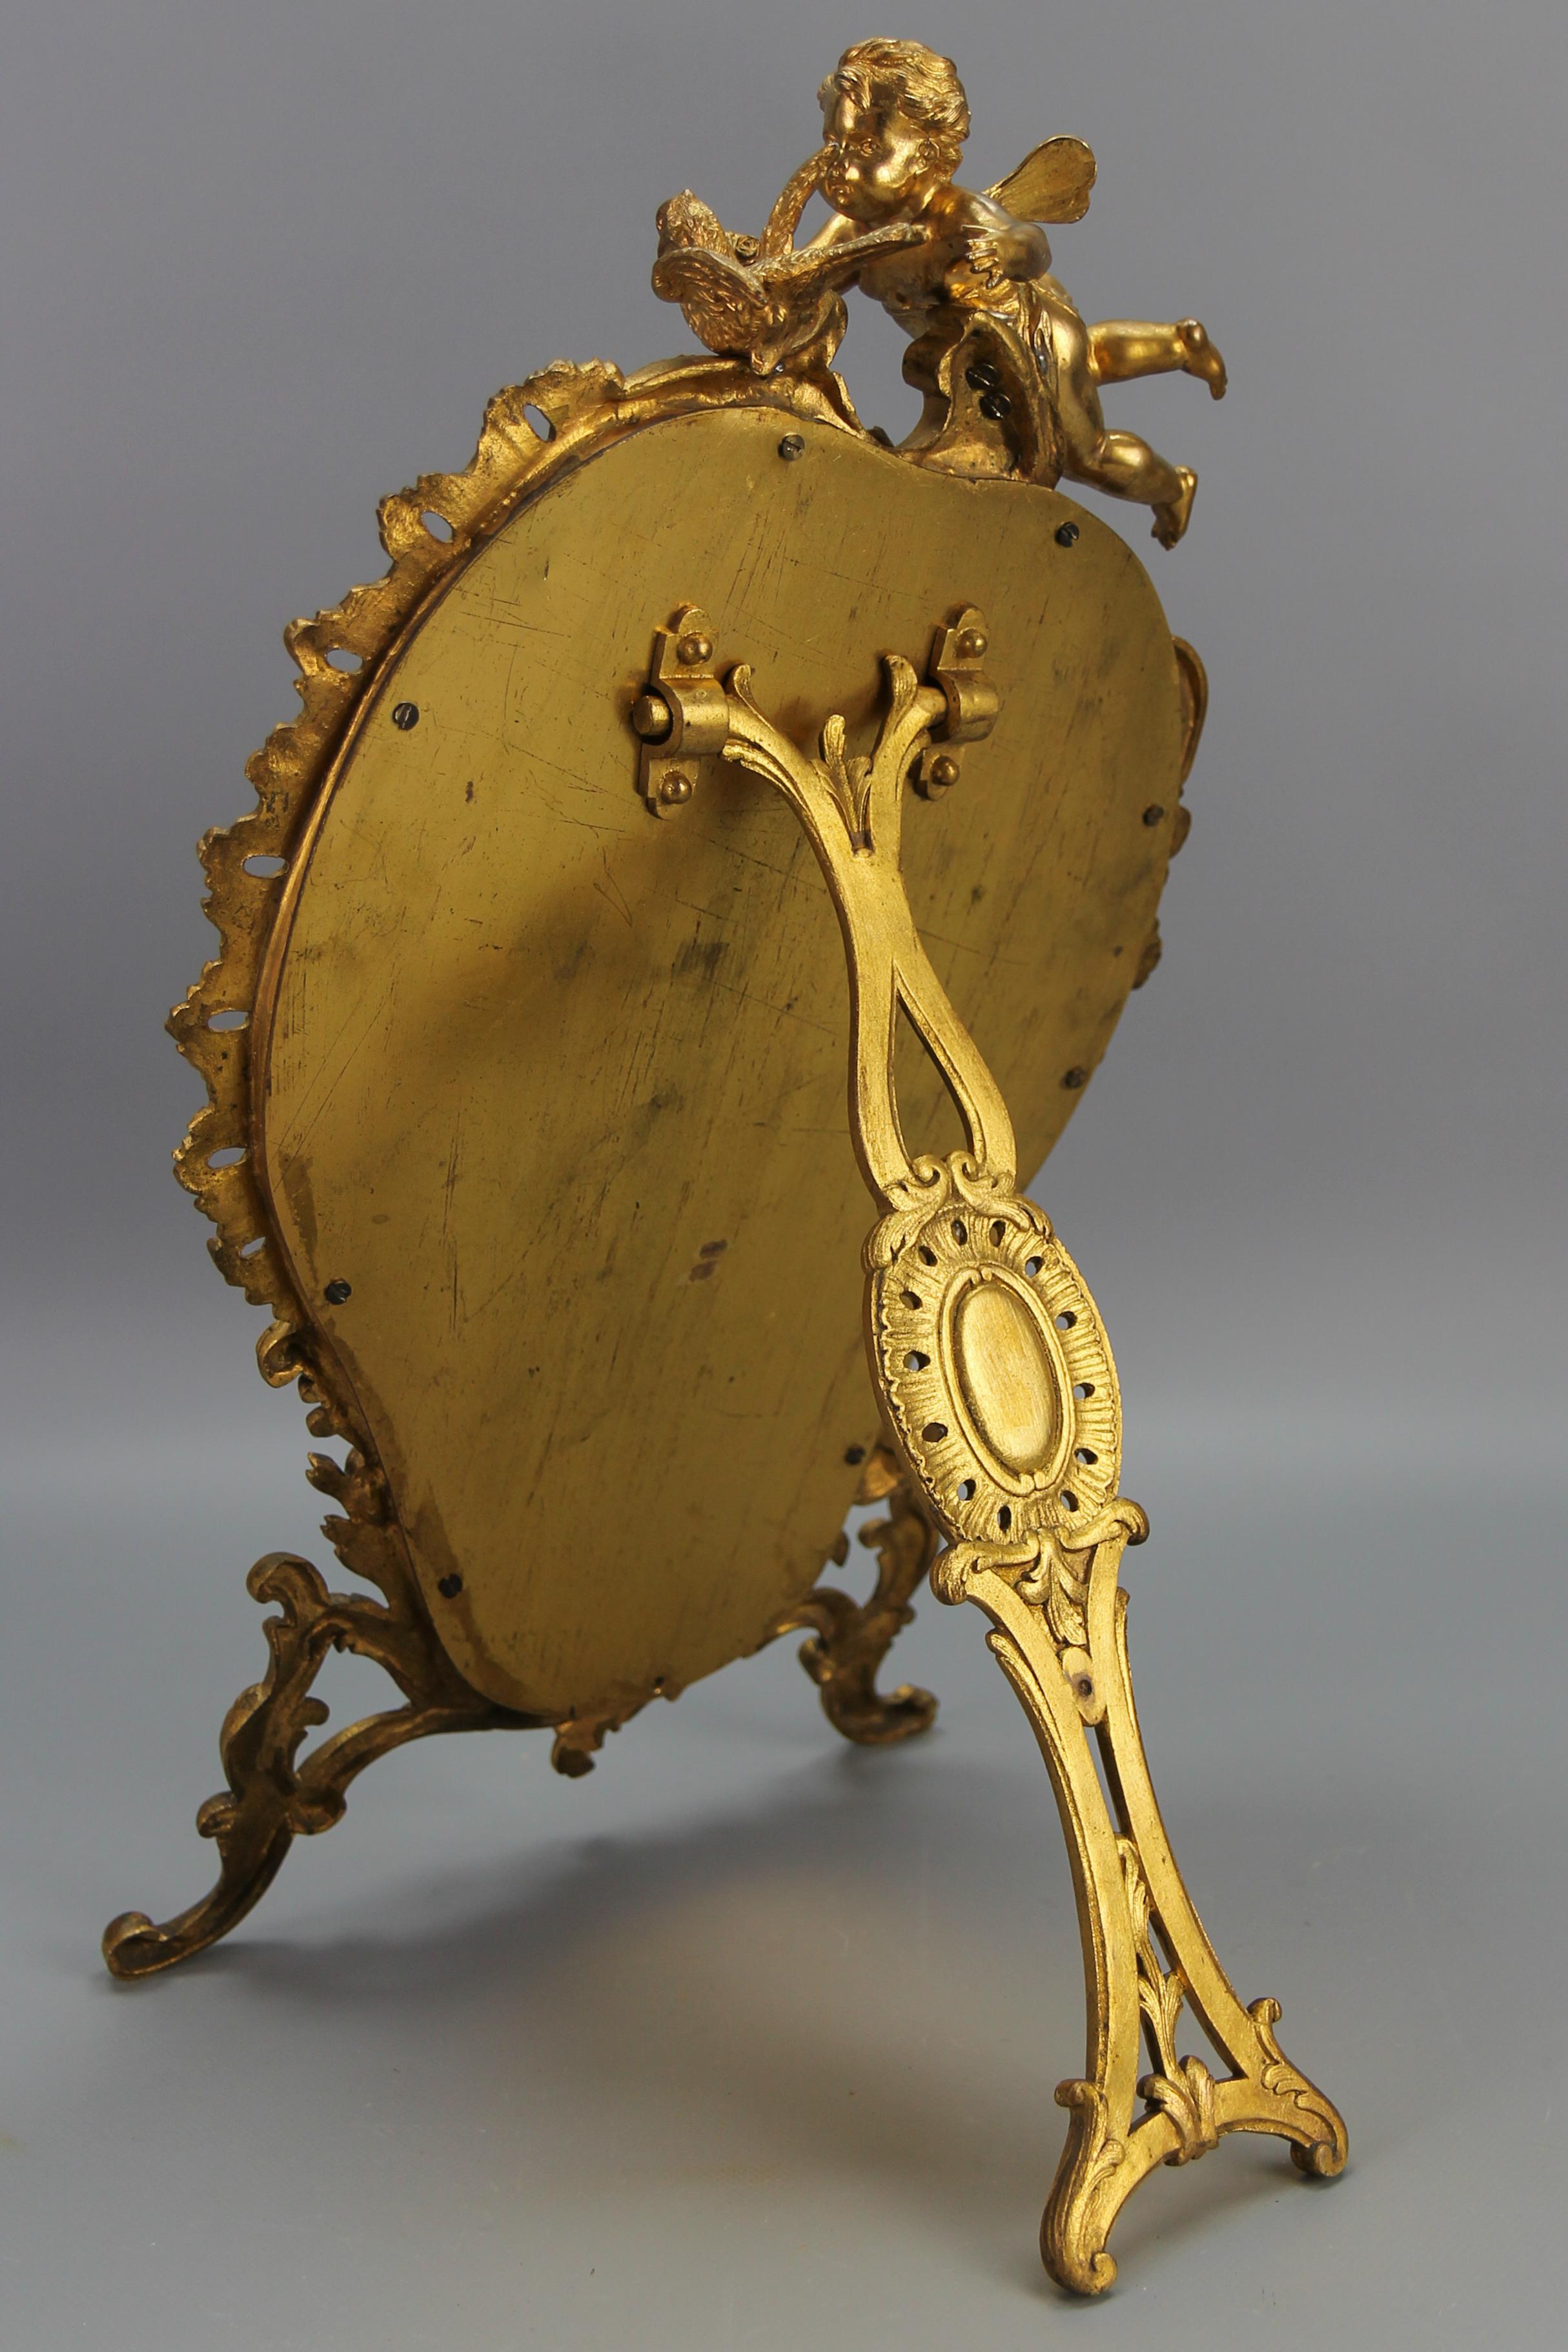 Antique French Gilt Bronze Rococo Style Desktop Mirror with Cherub and Bird For Sale 2